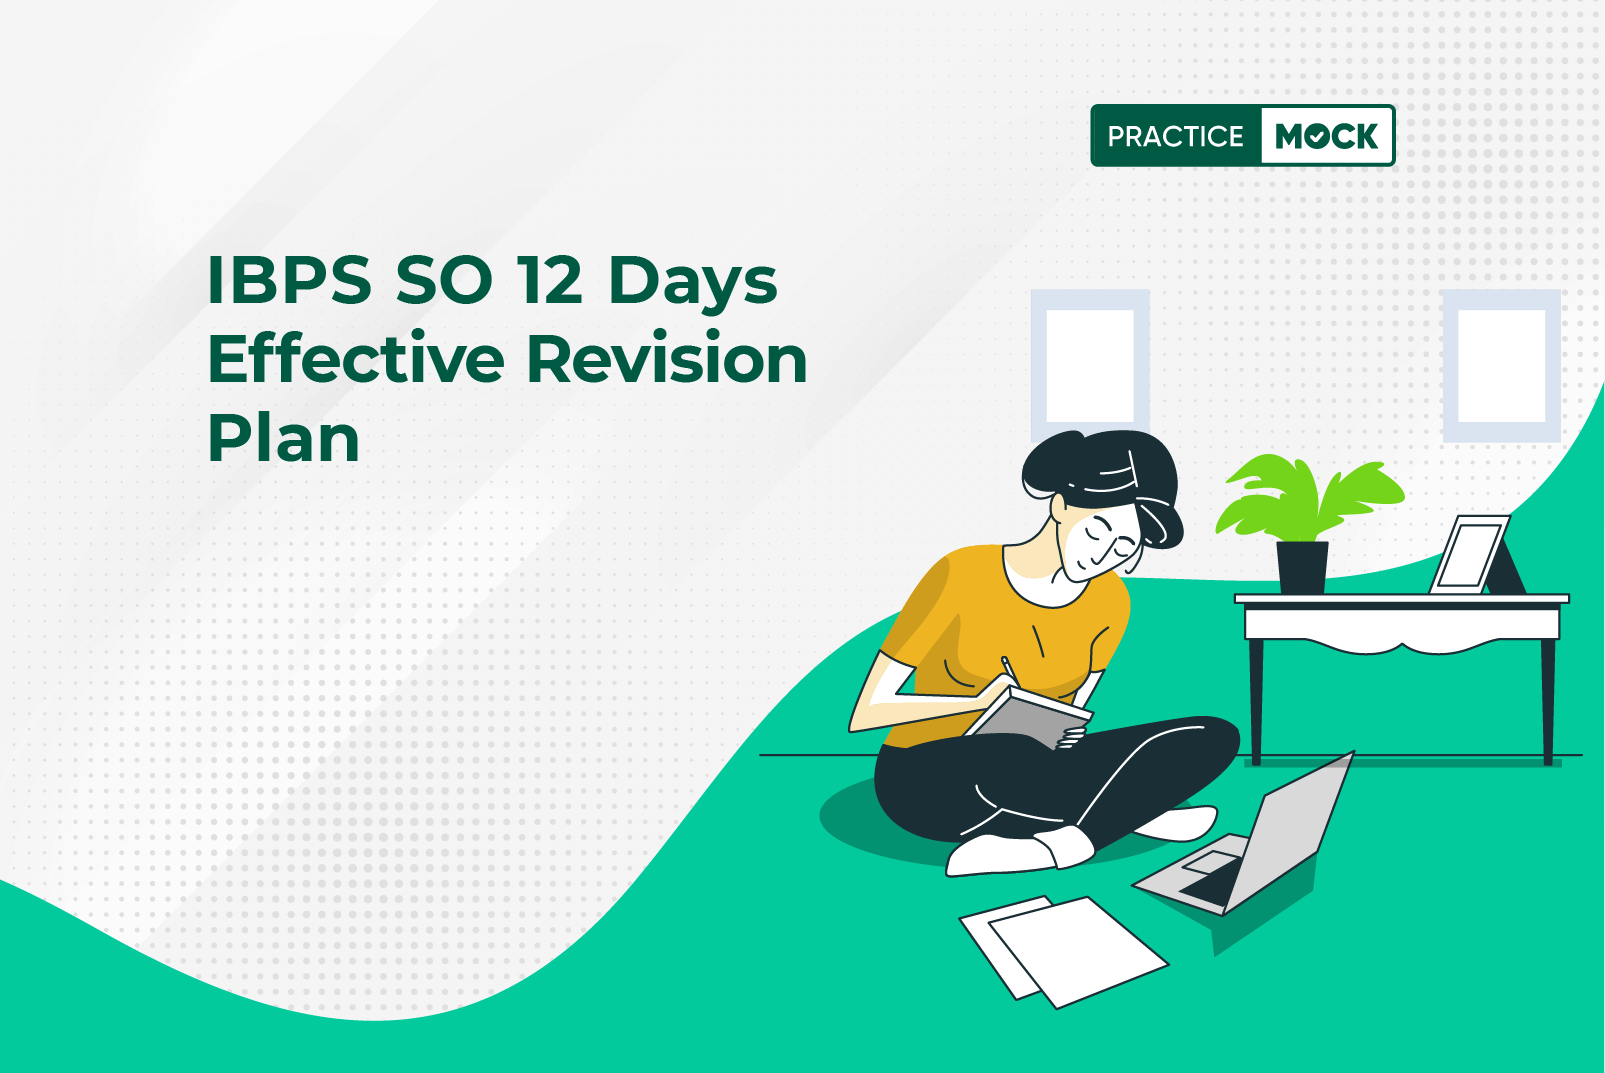 IBPS SO Effective Revision Plan